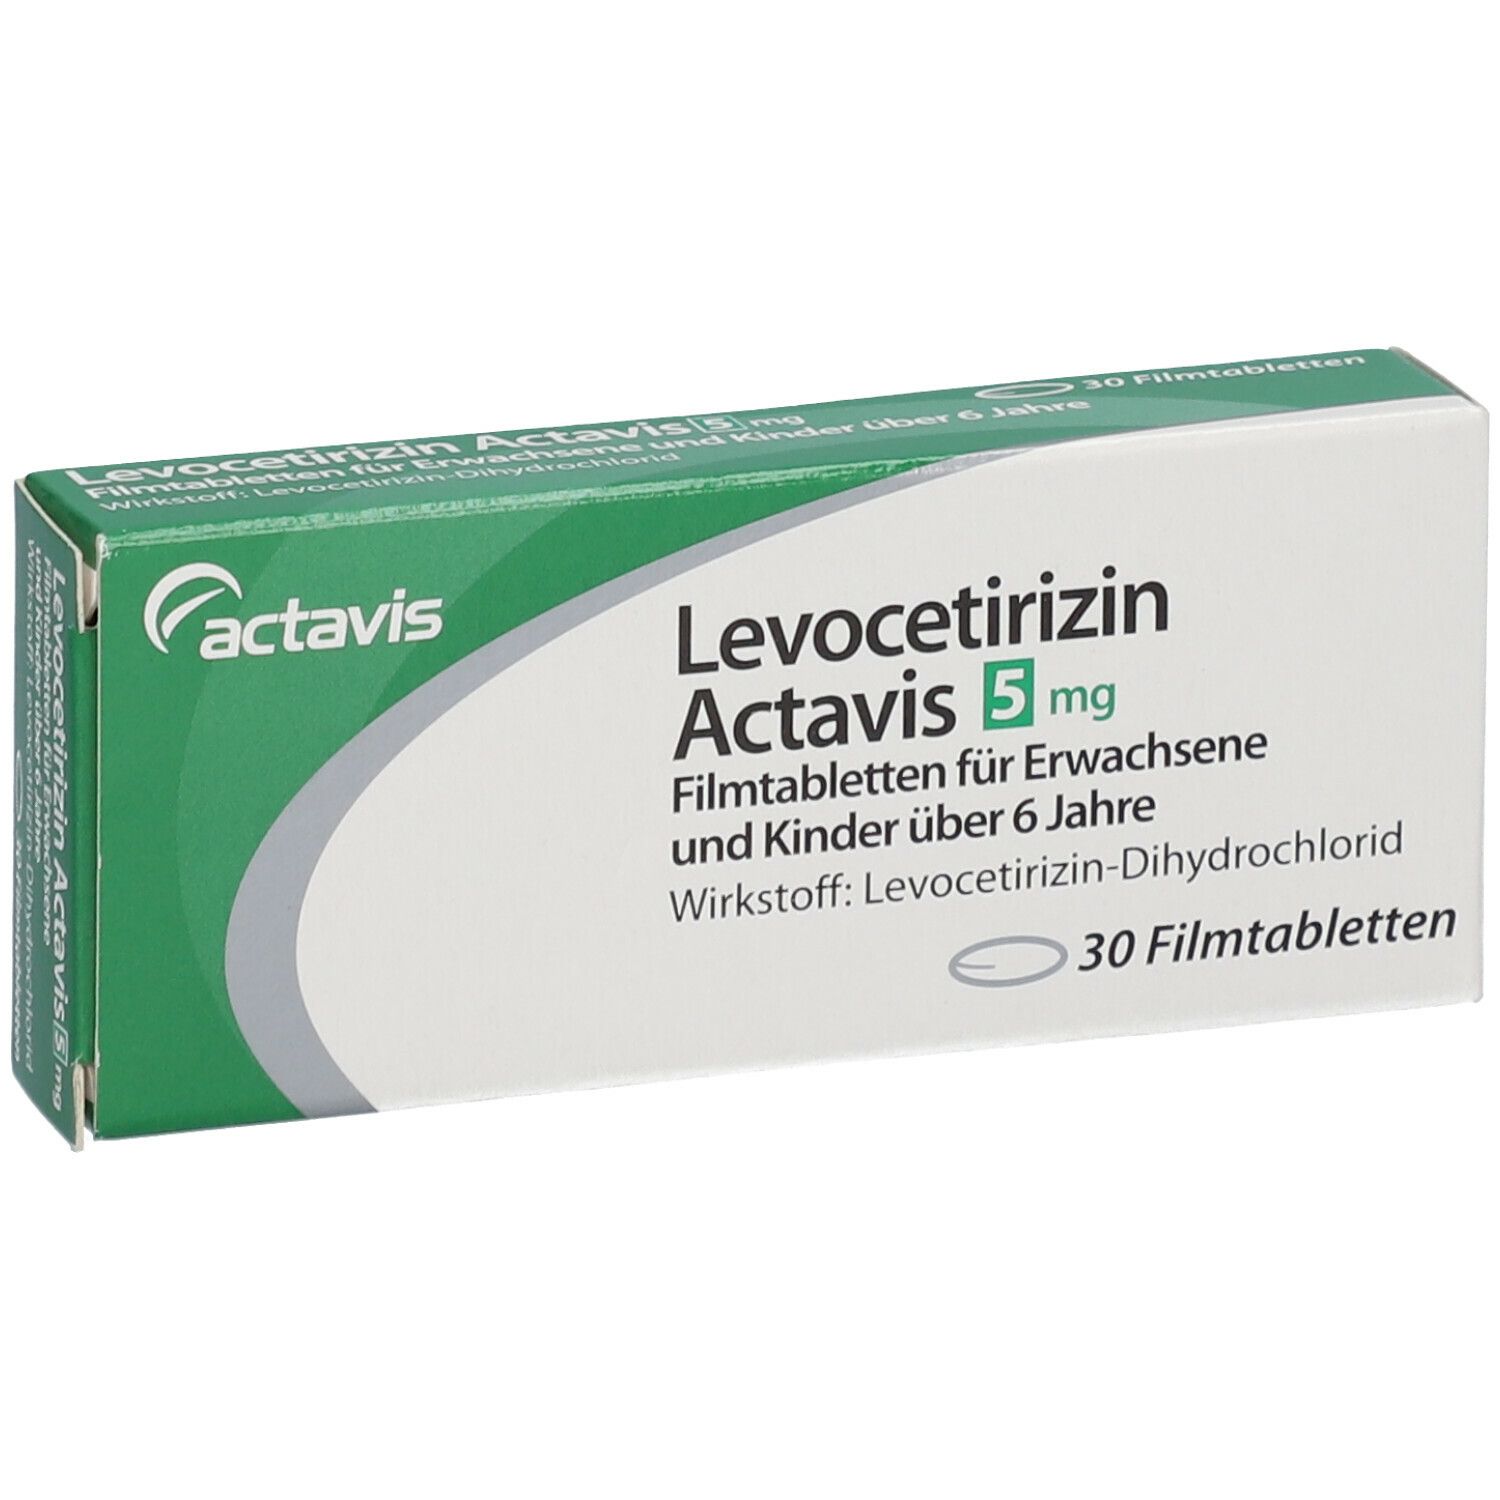 Levocetirizin Actavis 5 mg